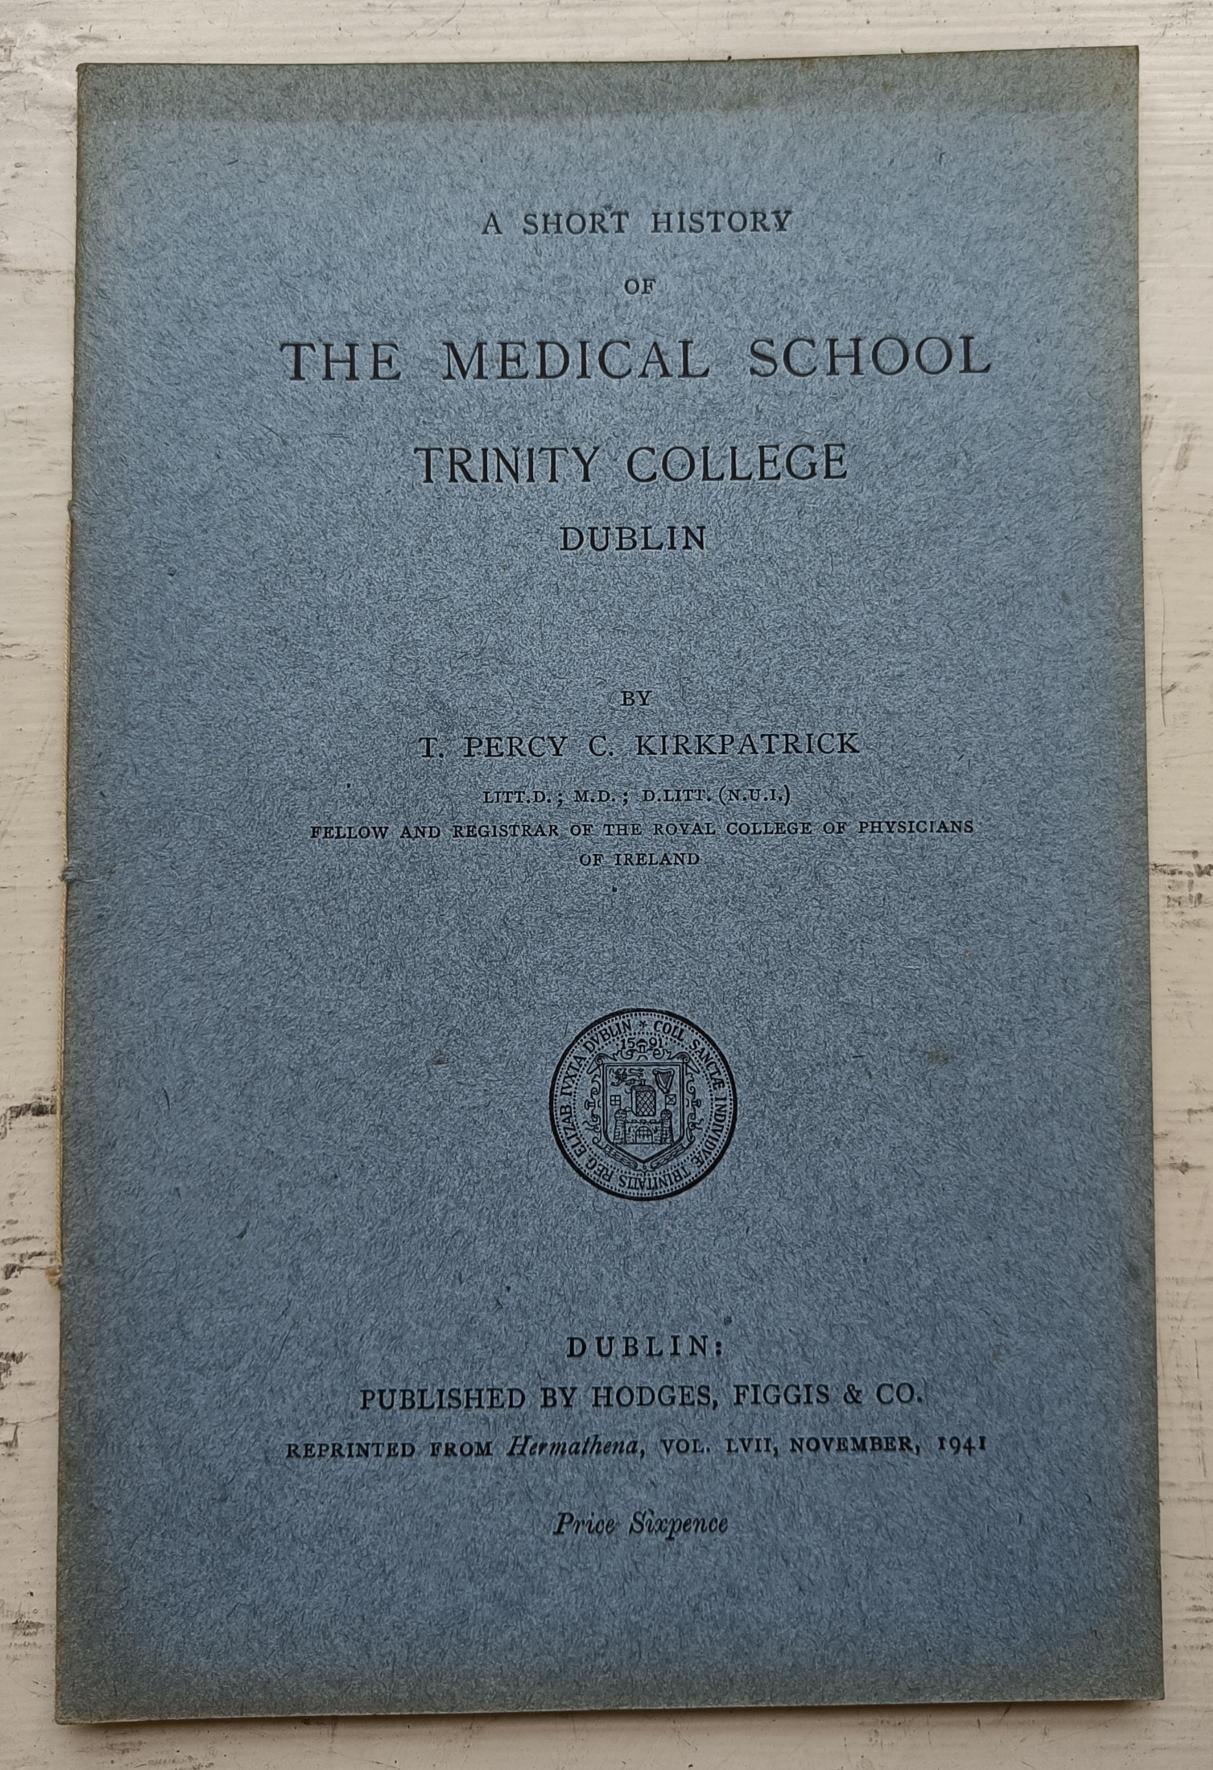 A Short History of The Medical School Trinity College Dublin - T. Percy C. Kirkpatrick